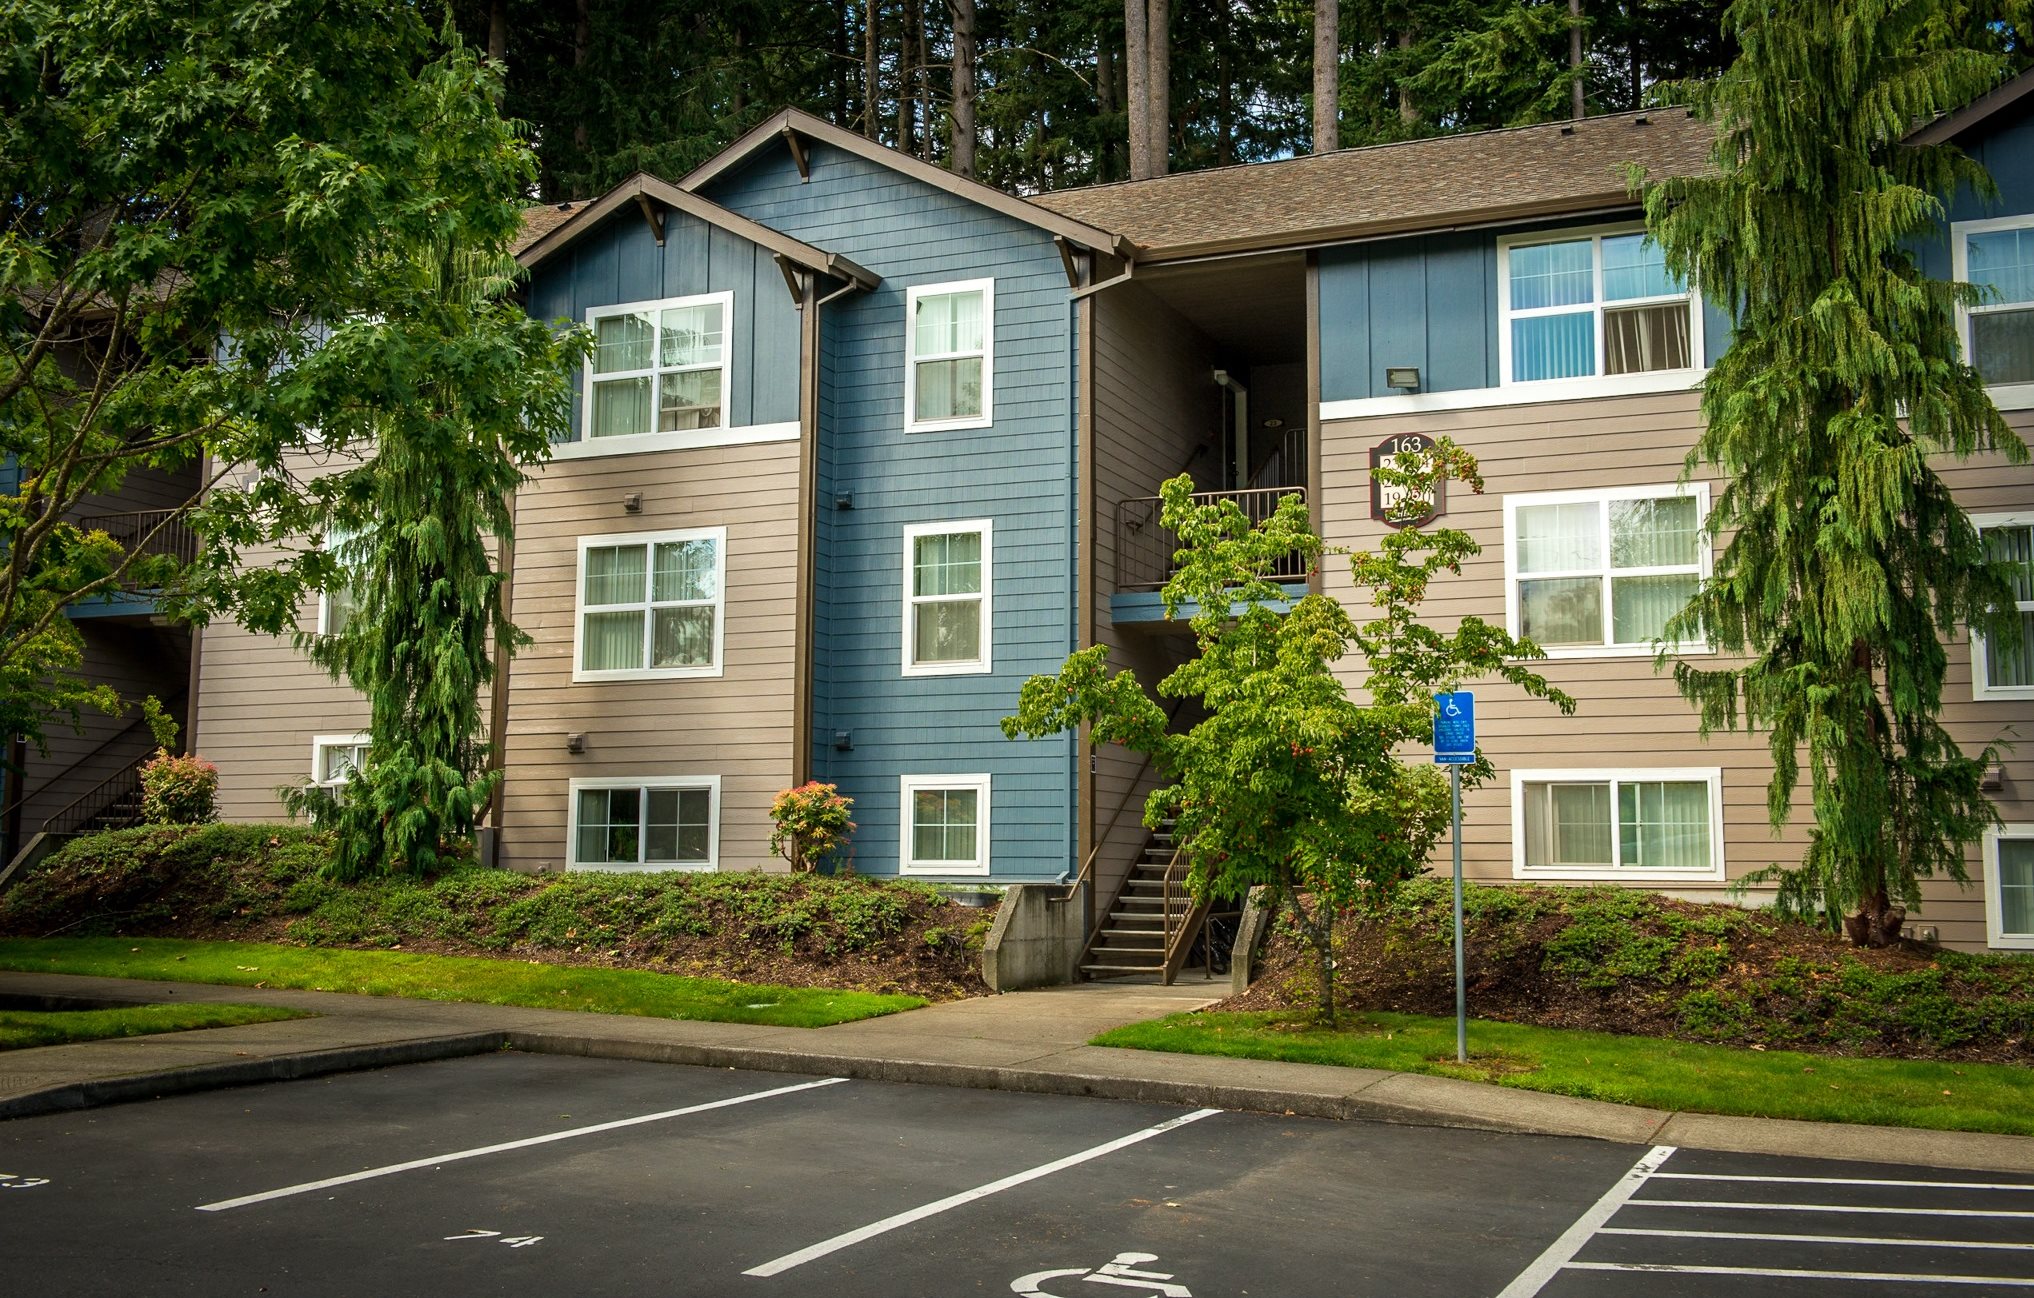 Minimalist Apartments For Rent In Hillsboro Oregon 97124 with Modern Futniture